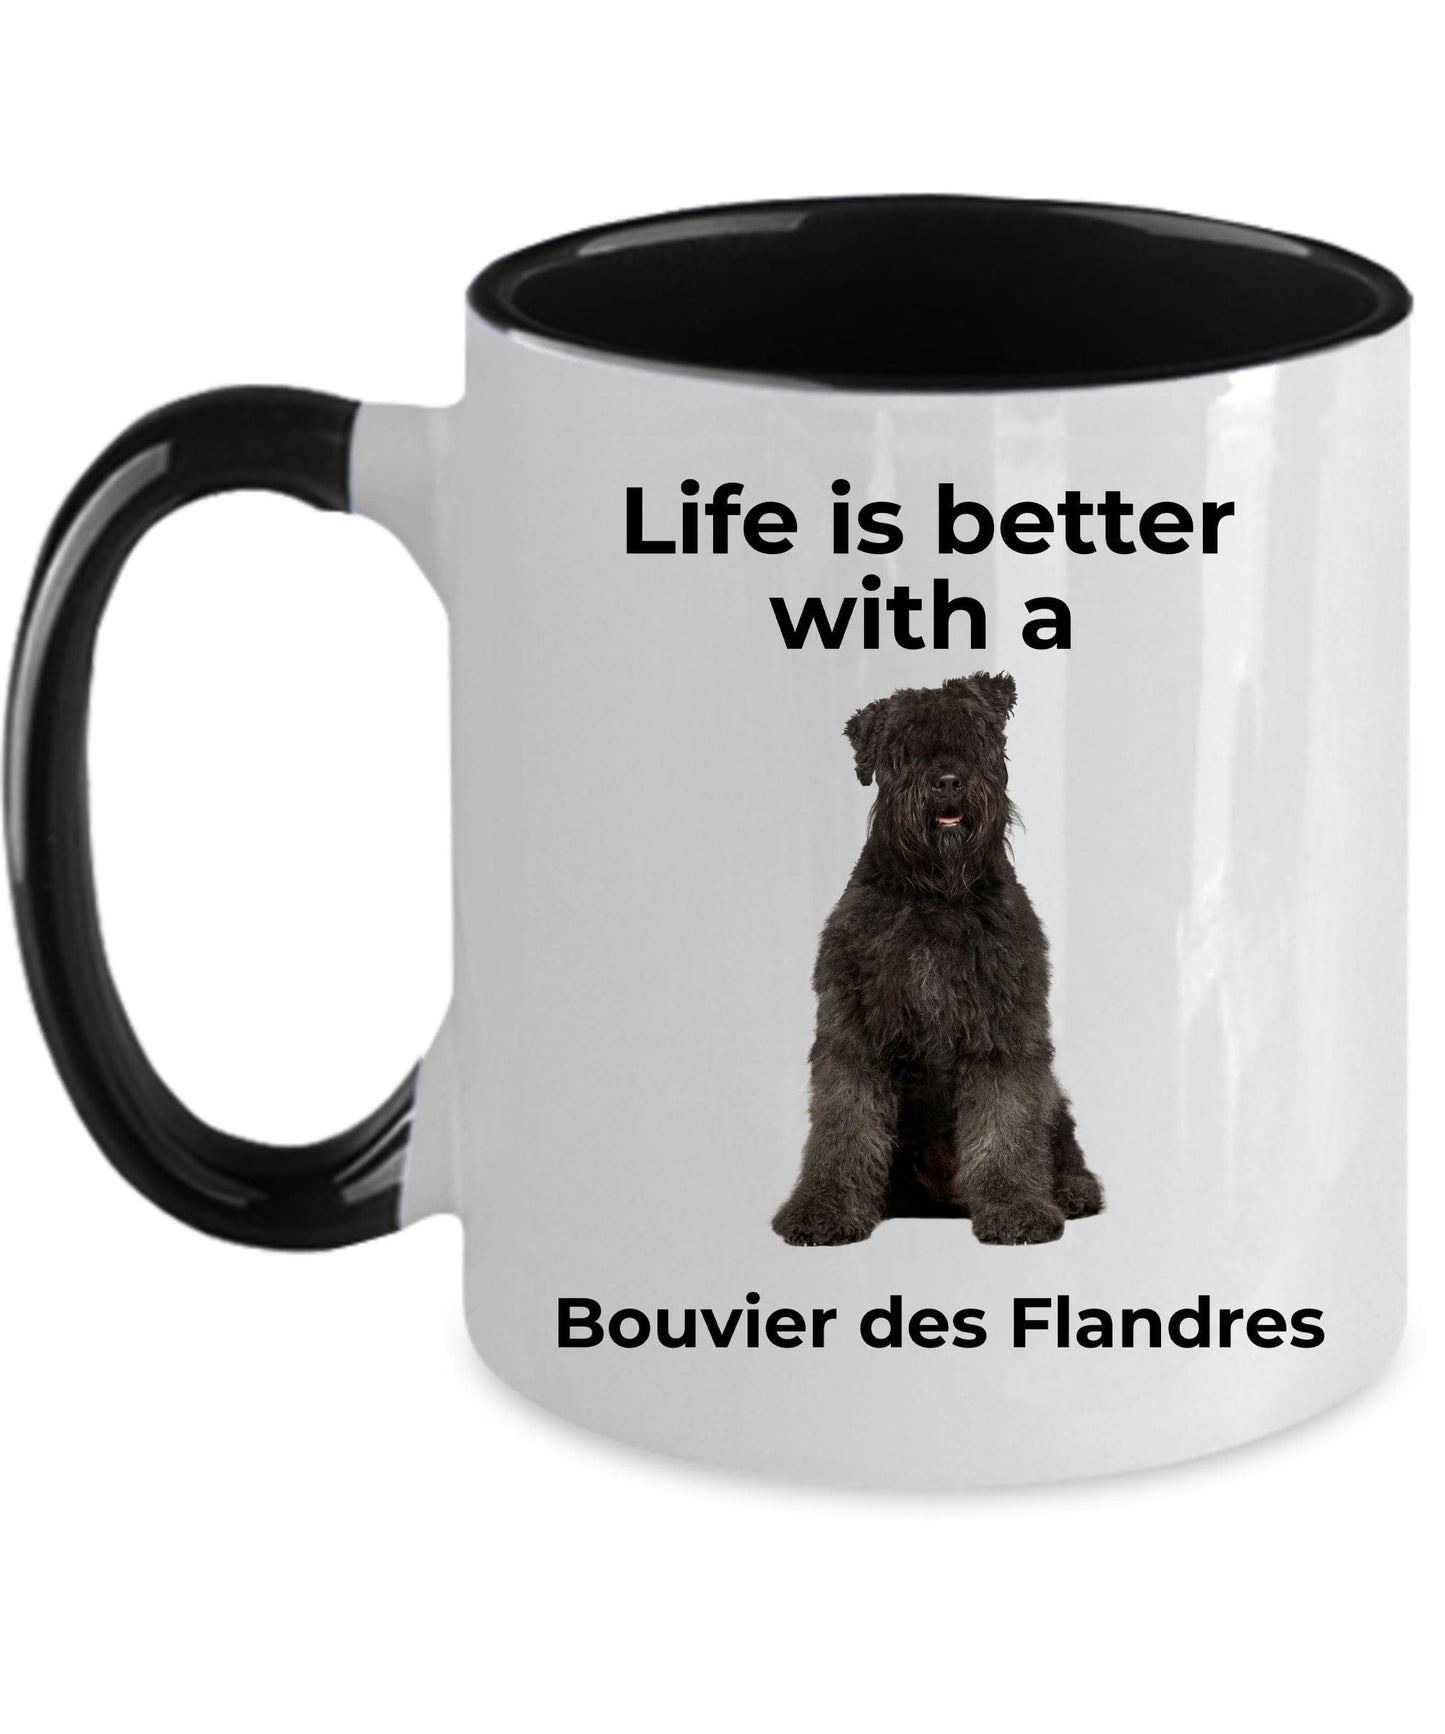 Bouvier des Flandres Mug - Life is better with a Bouvier